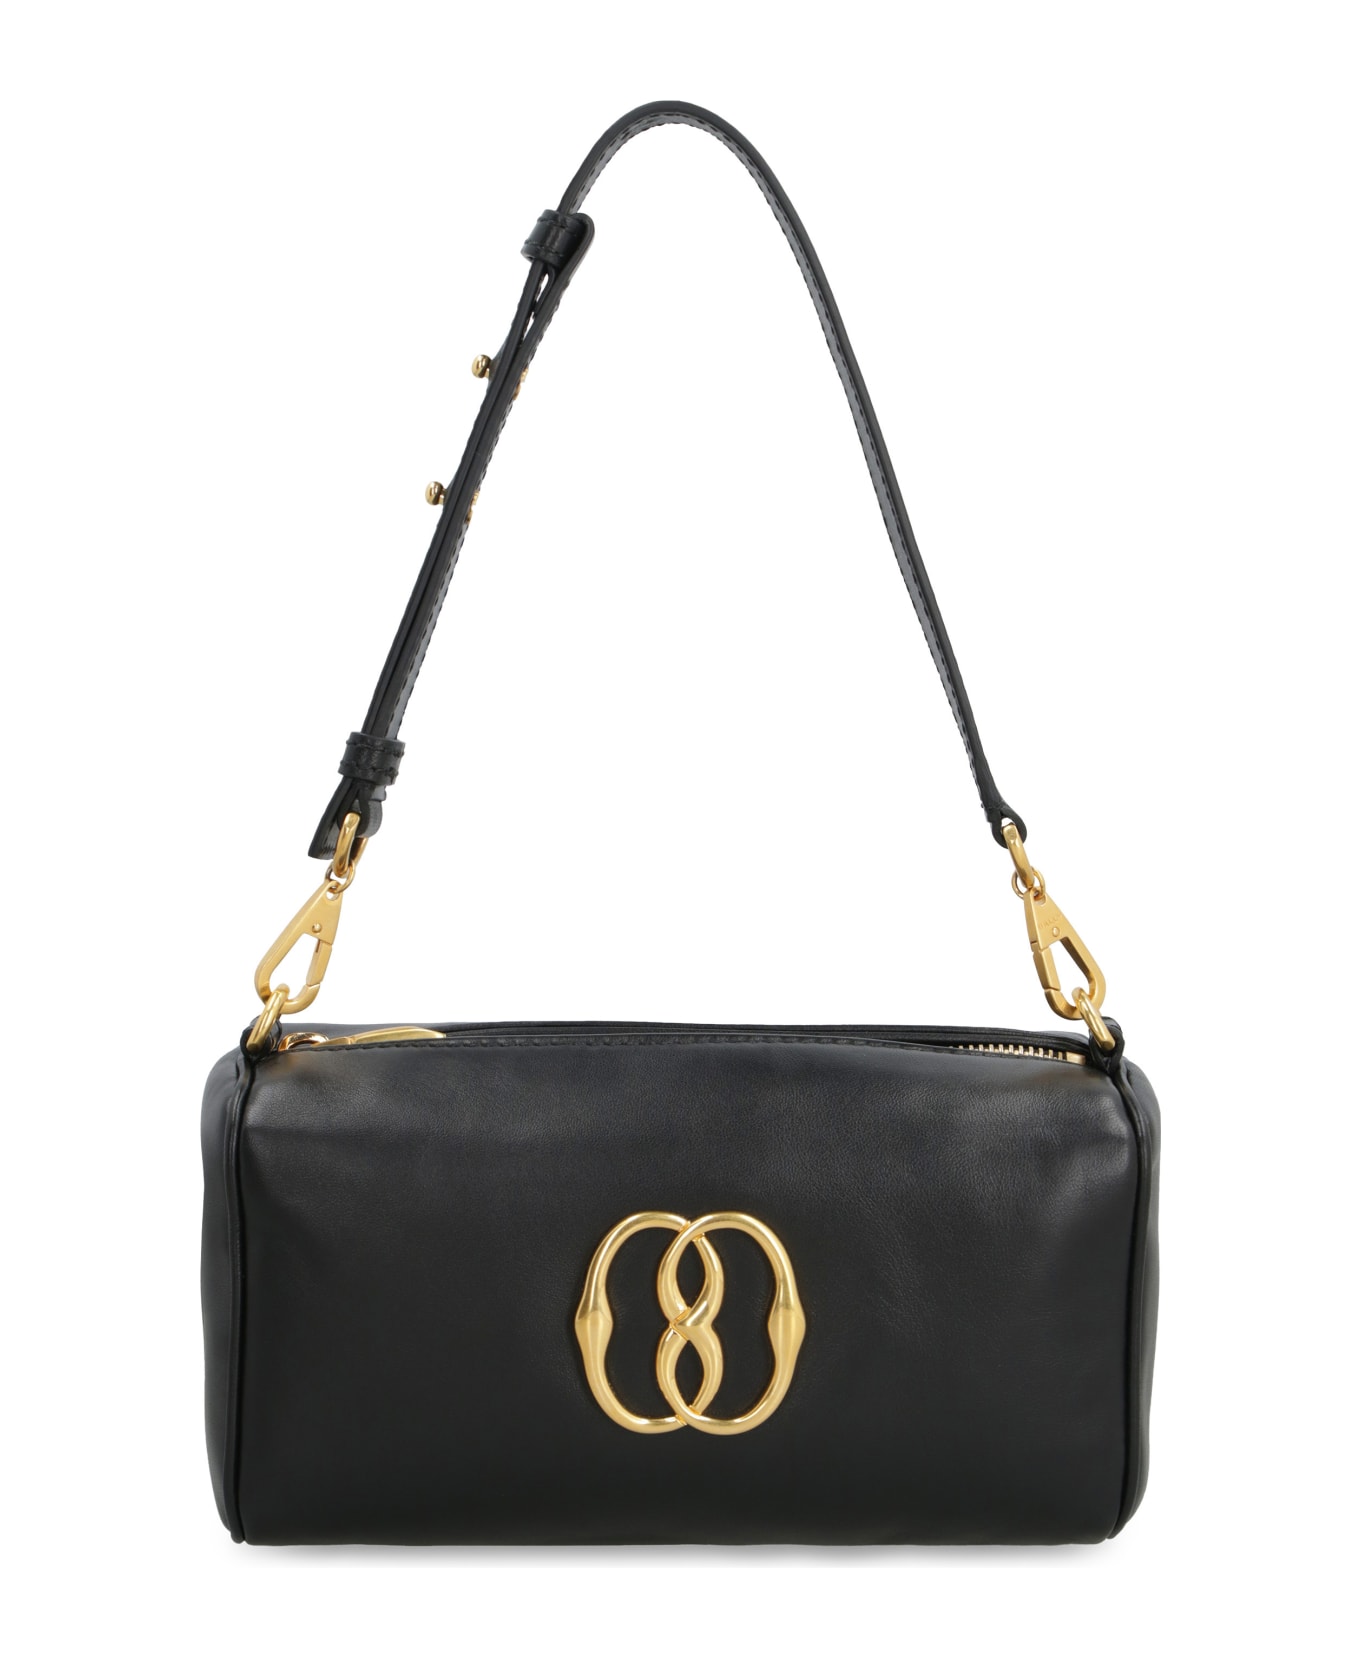 Bally Emblem Rox Leather Shoulder Bag - Black/oro